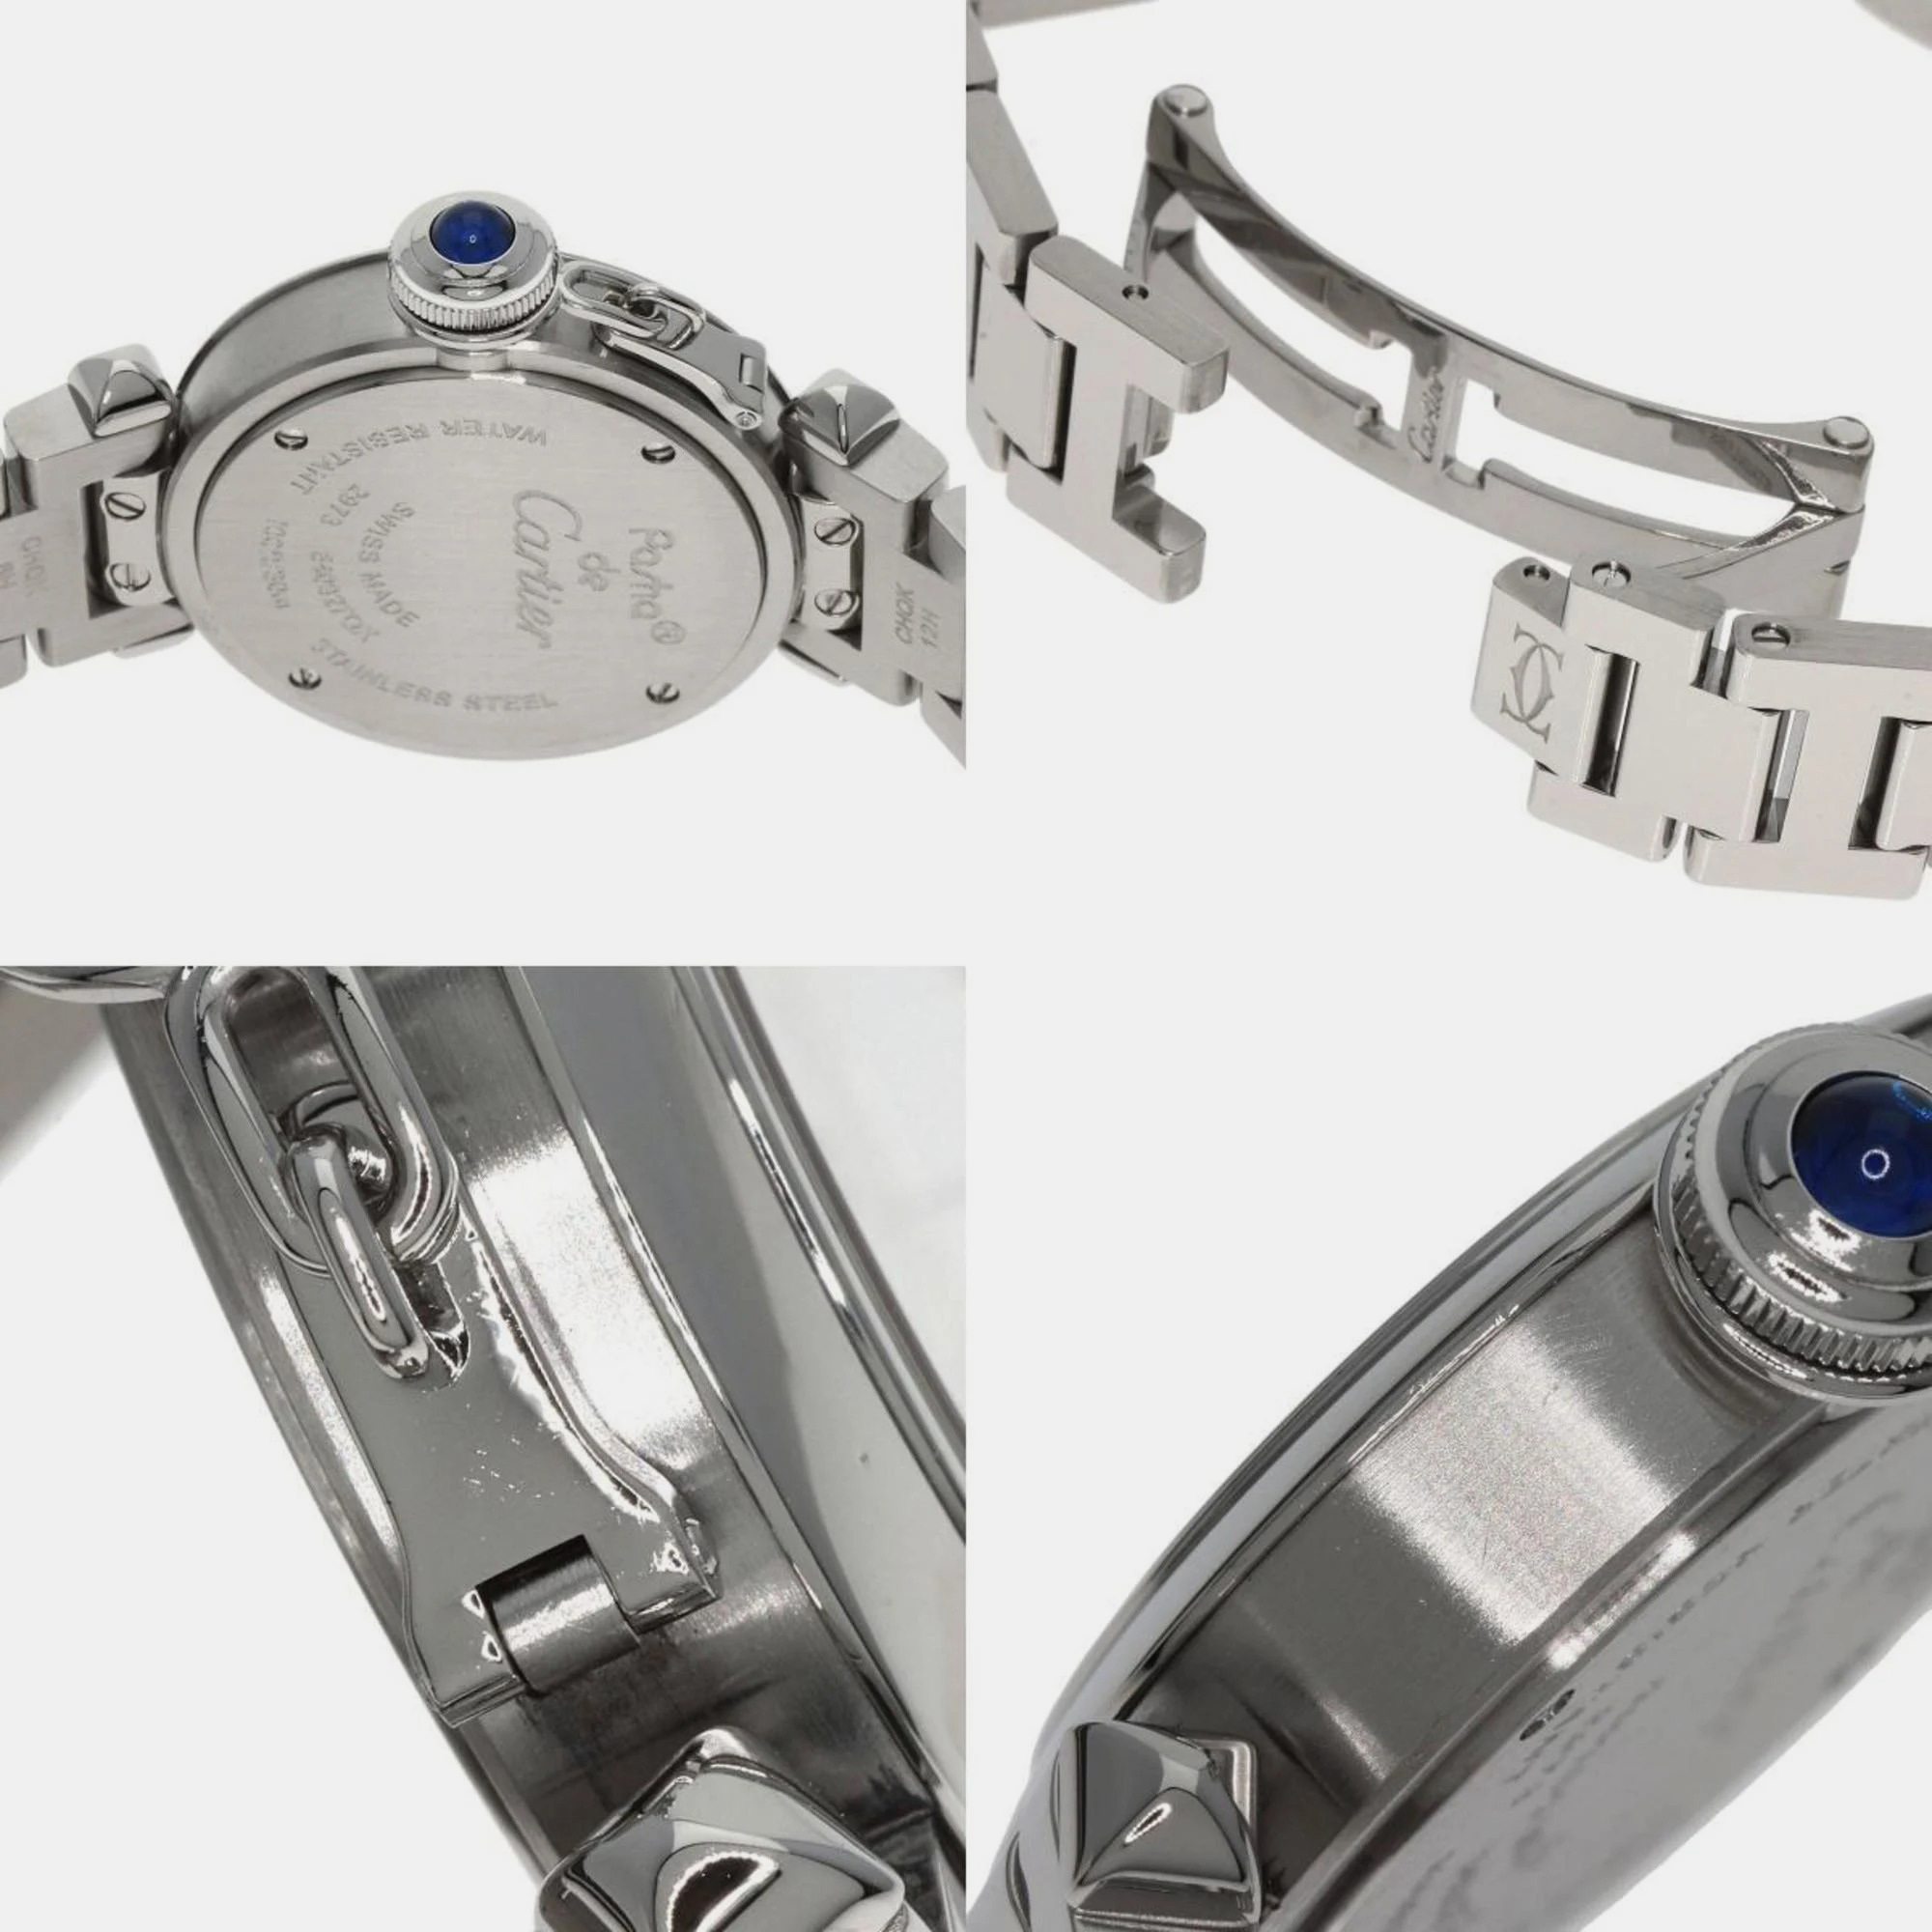 Cartier Silver Stainless Steel Miss Pasha W3140007 Quartz Women's Wristwatch 27 Mm